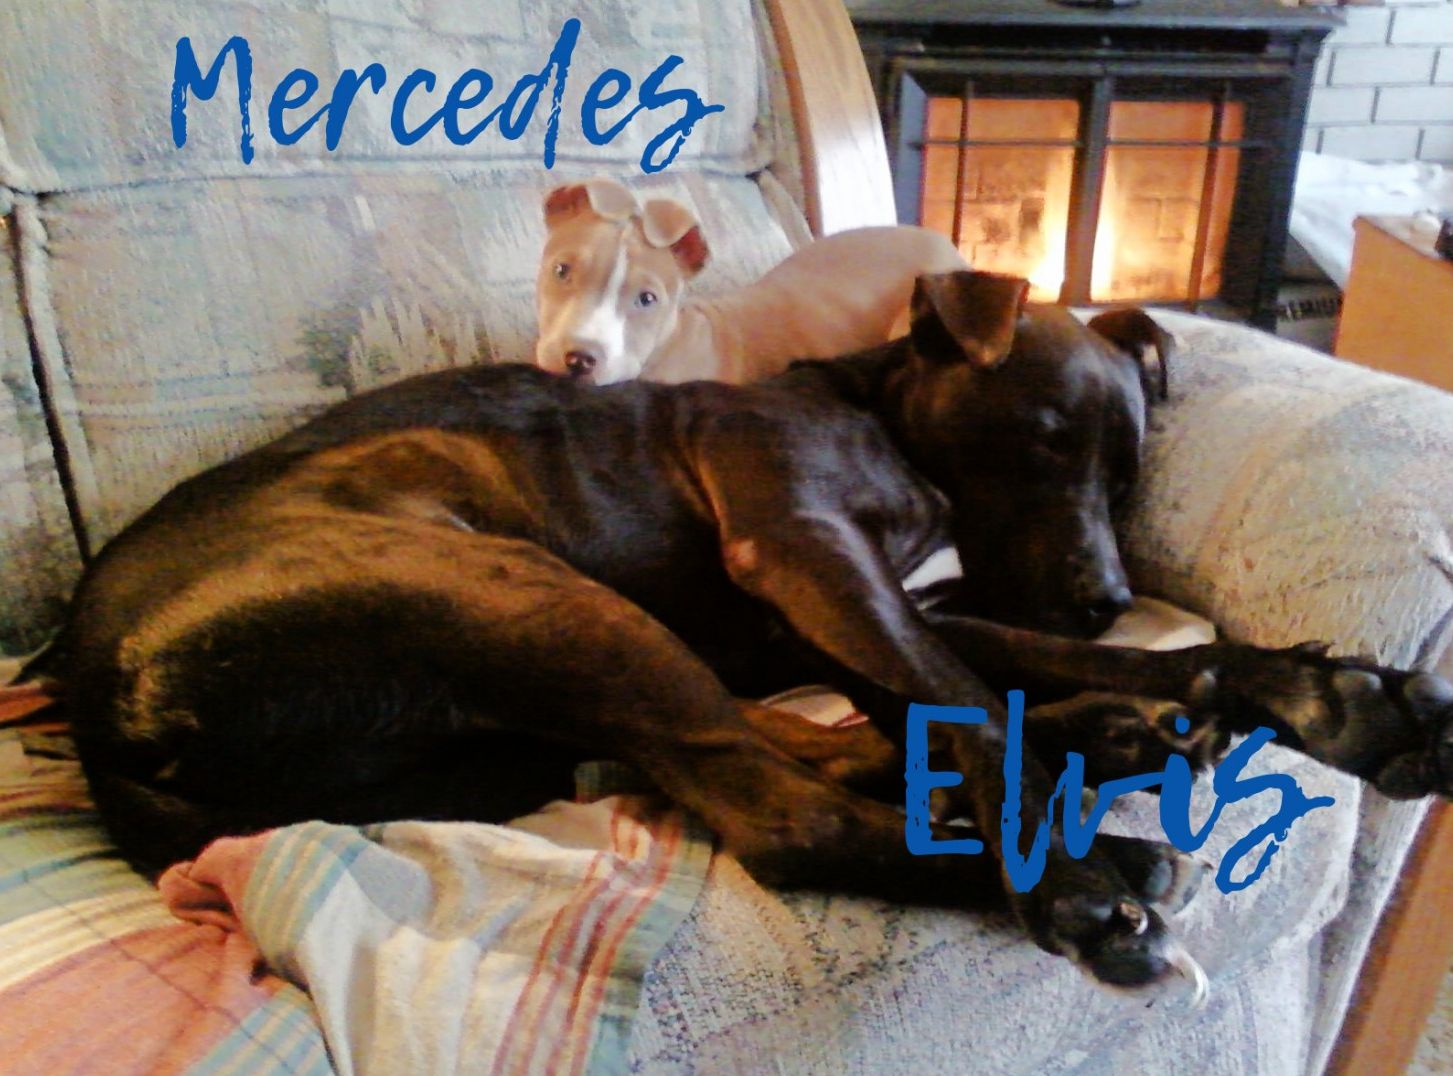 Mercedes & Elvis